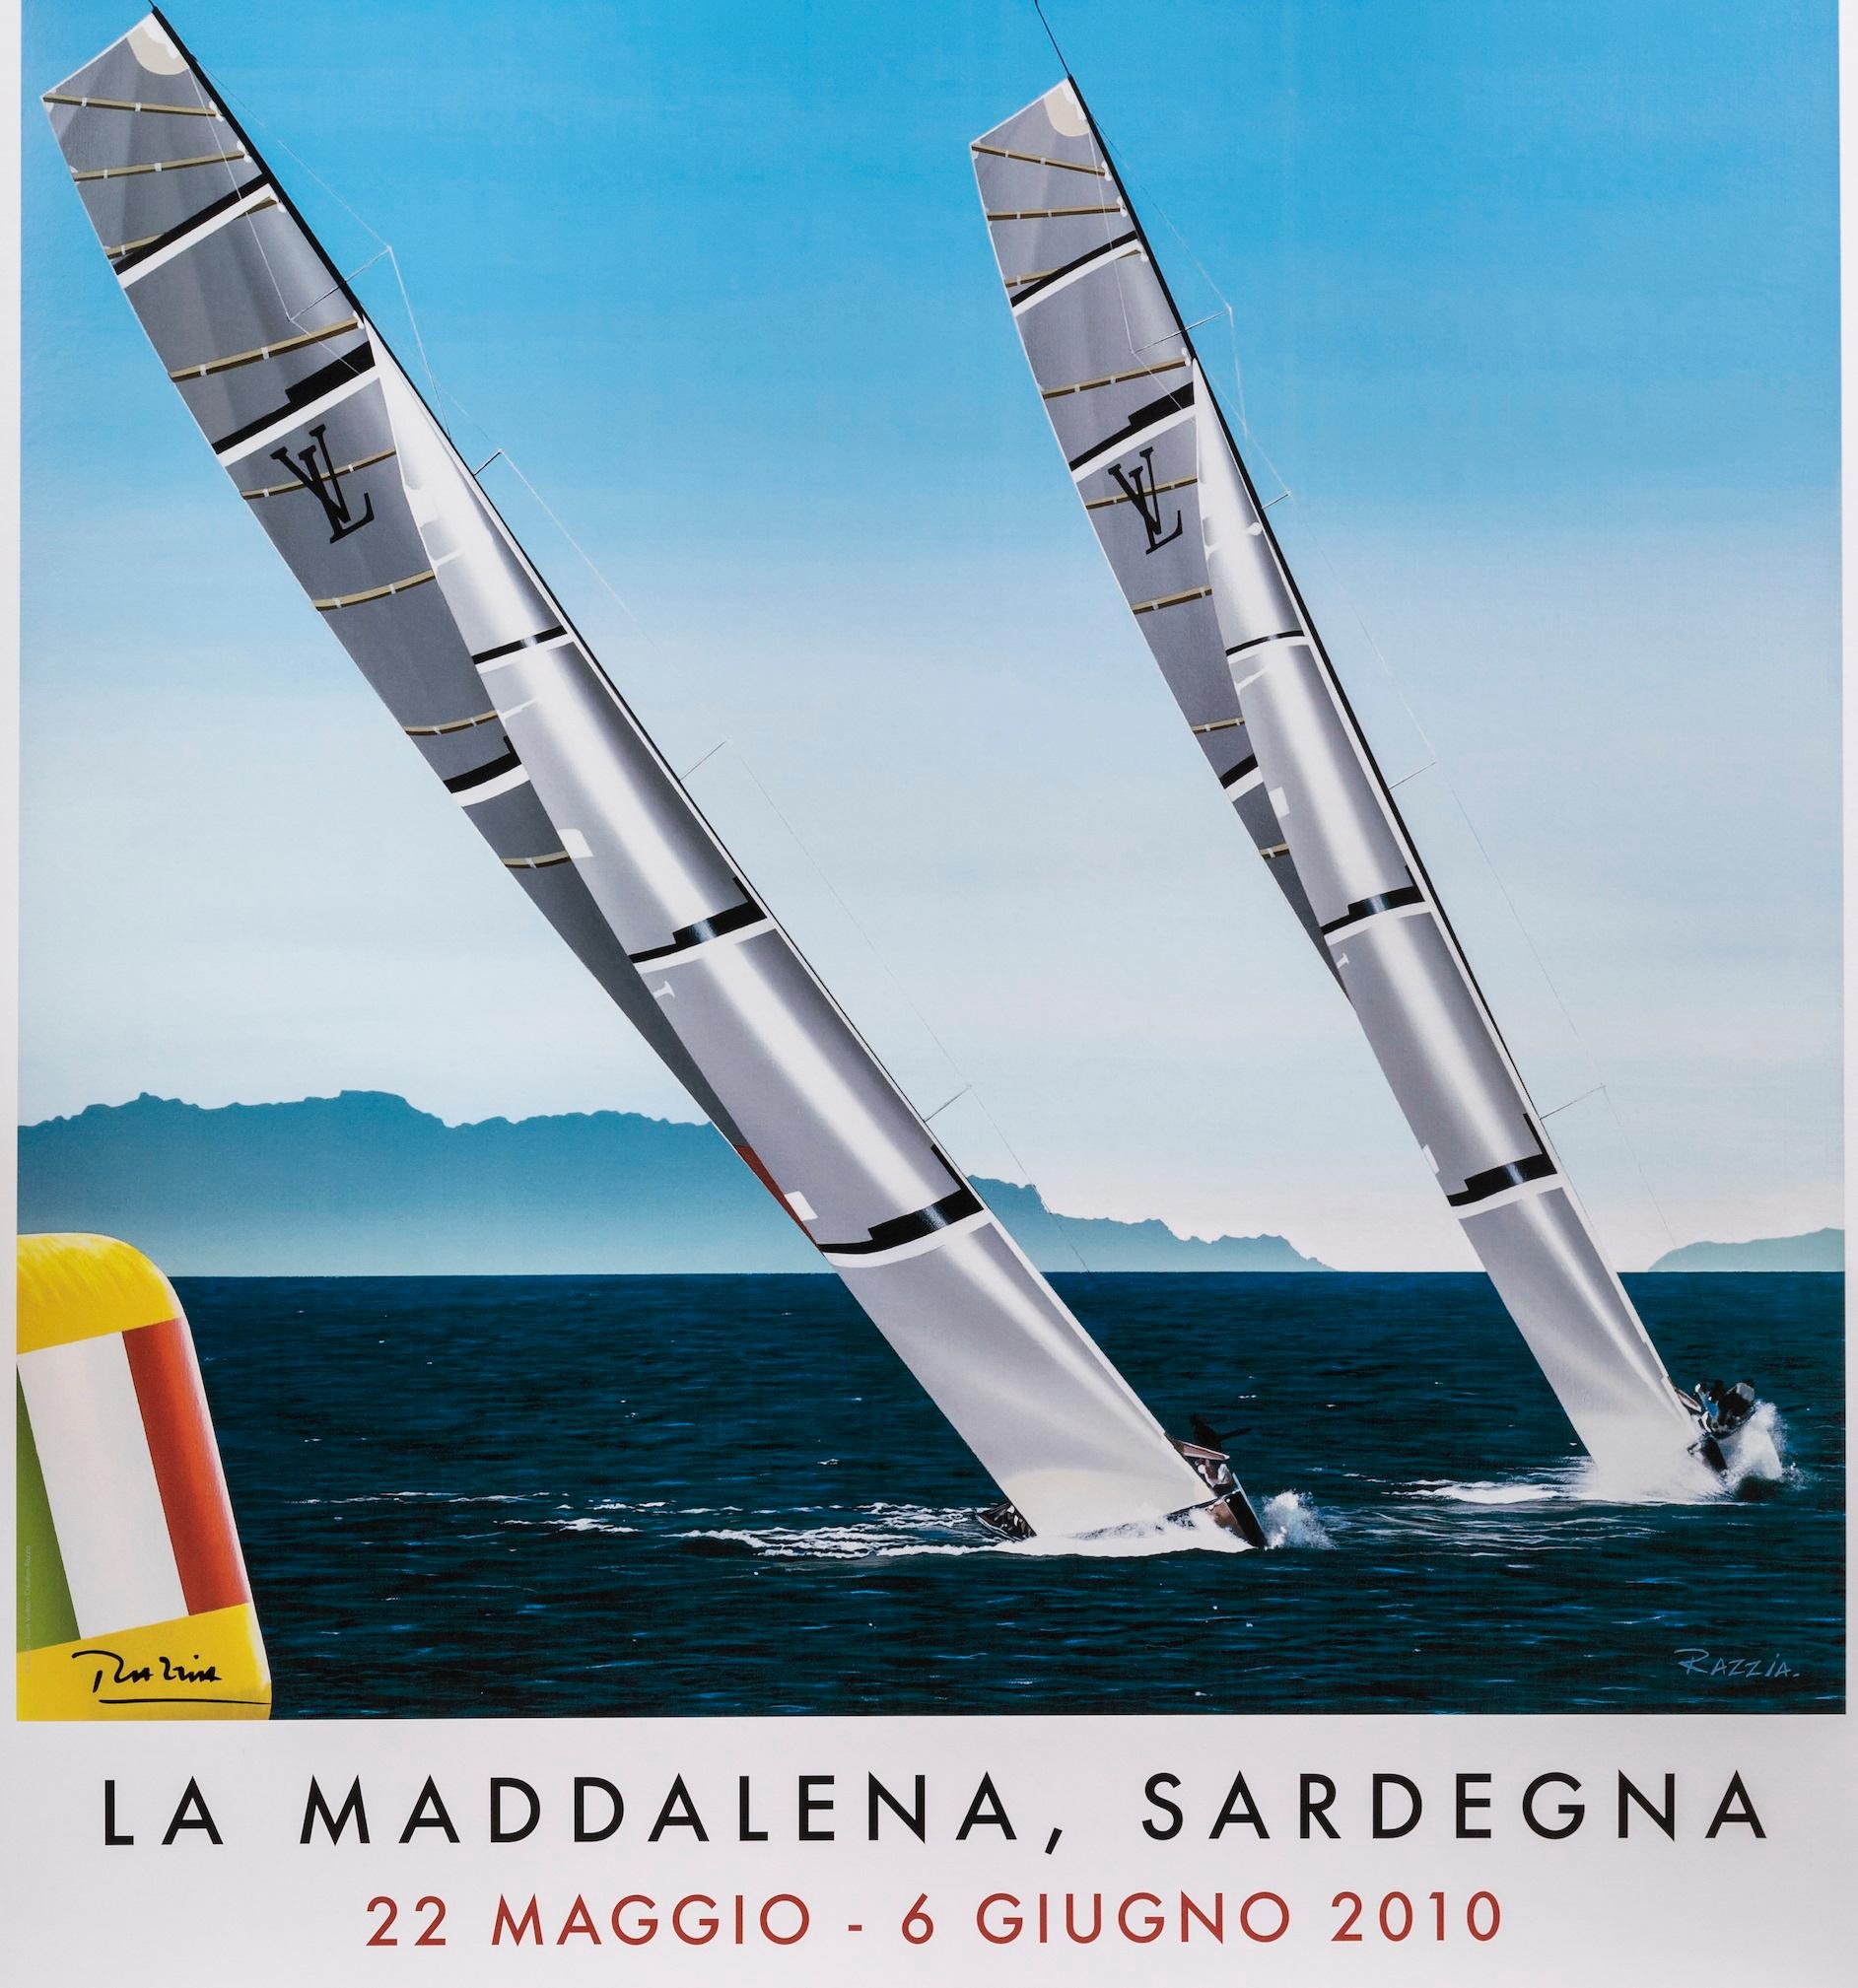 Razzia, Original Louis Vuitton Boat Poster, La Maddalena, Sailing Ship, 2010

Artist: Razzia
Title: Louis Vuitton Trophy La Maddalena Sardegna
Date: 2010
Size (w x h): 40.8 x 55.5 in / 103.5 x 141 cm
Materials and Techniques: Colour lithograph on